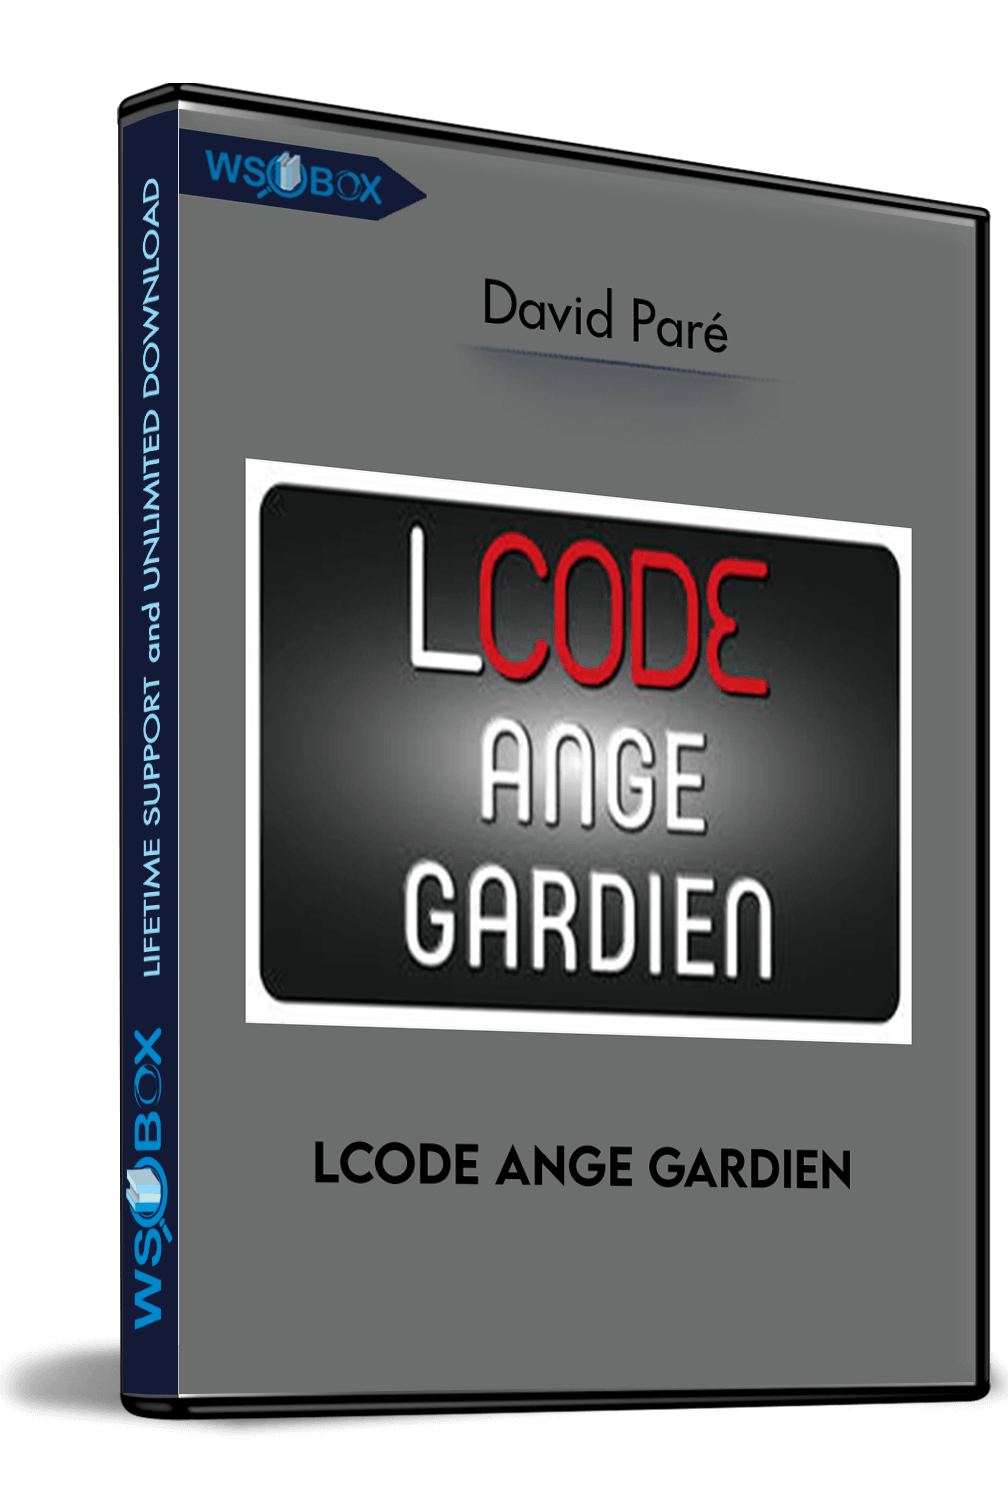 lcode-ange-gardien-david-pare